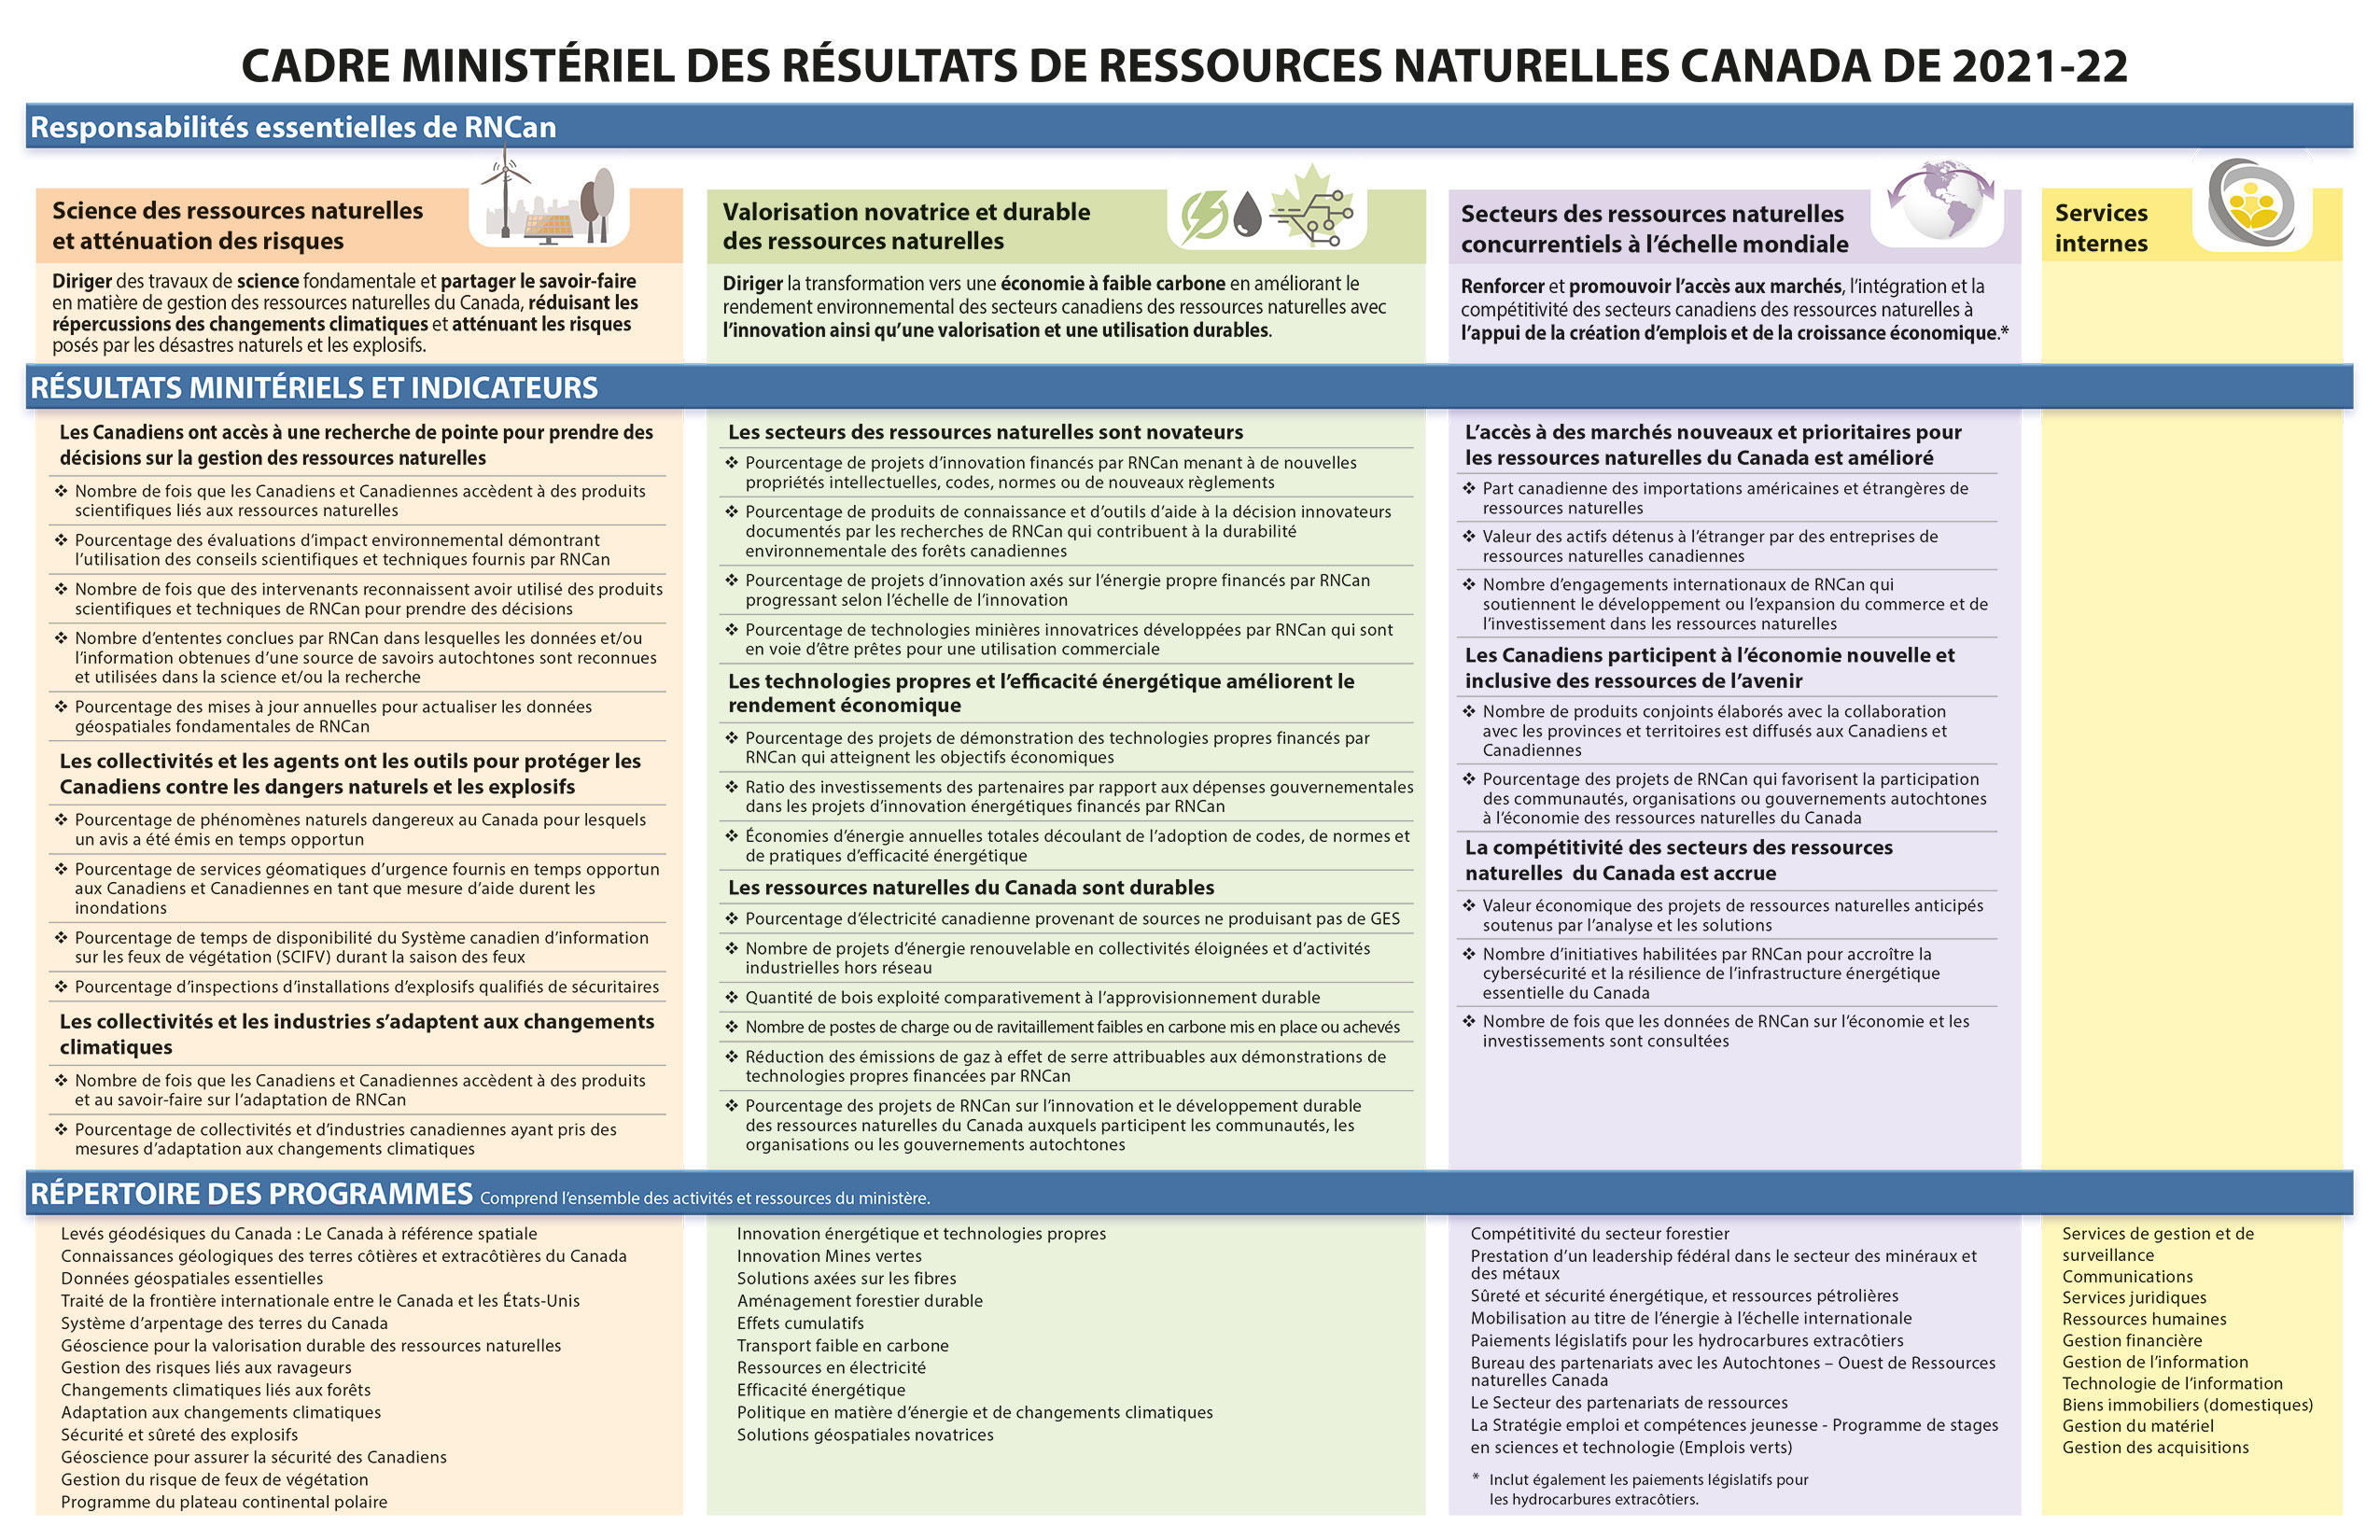 Cadre ministériel des résultats de ressources naturelles Canada 2021-22